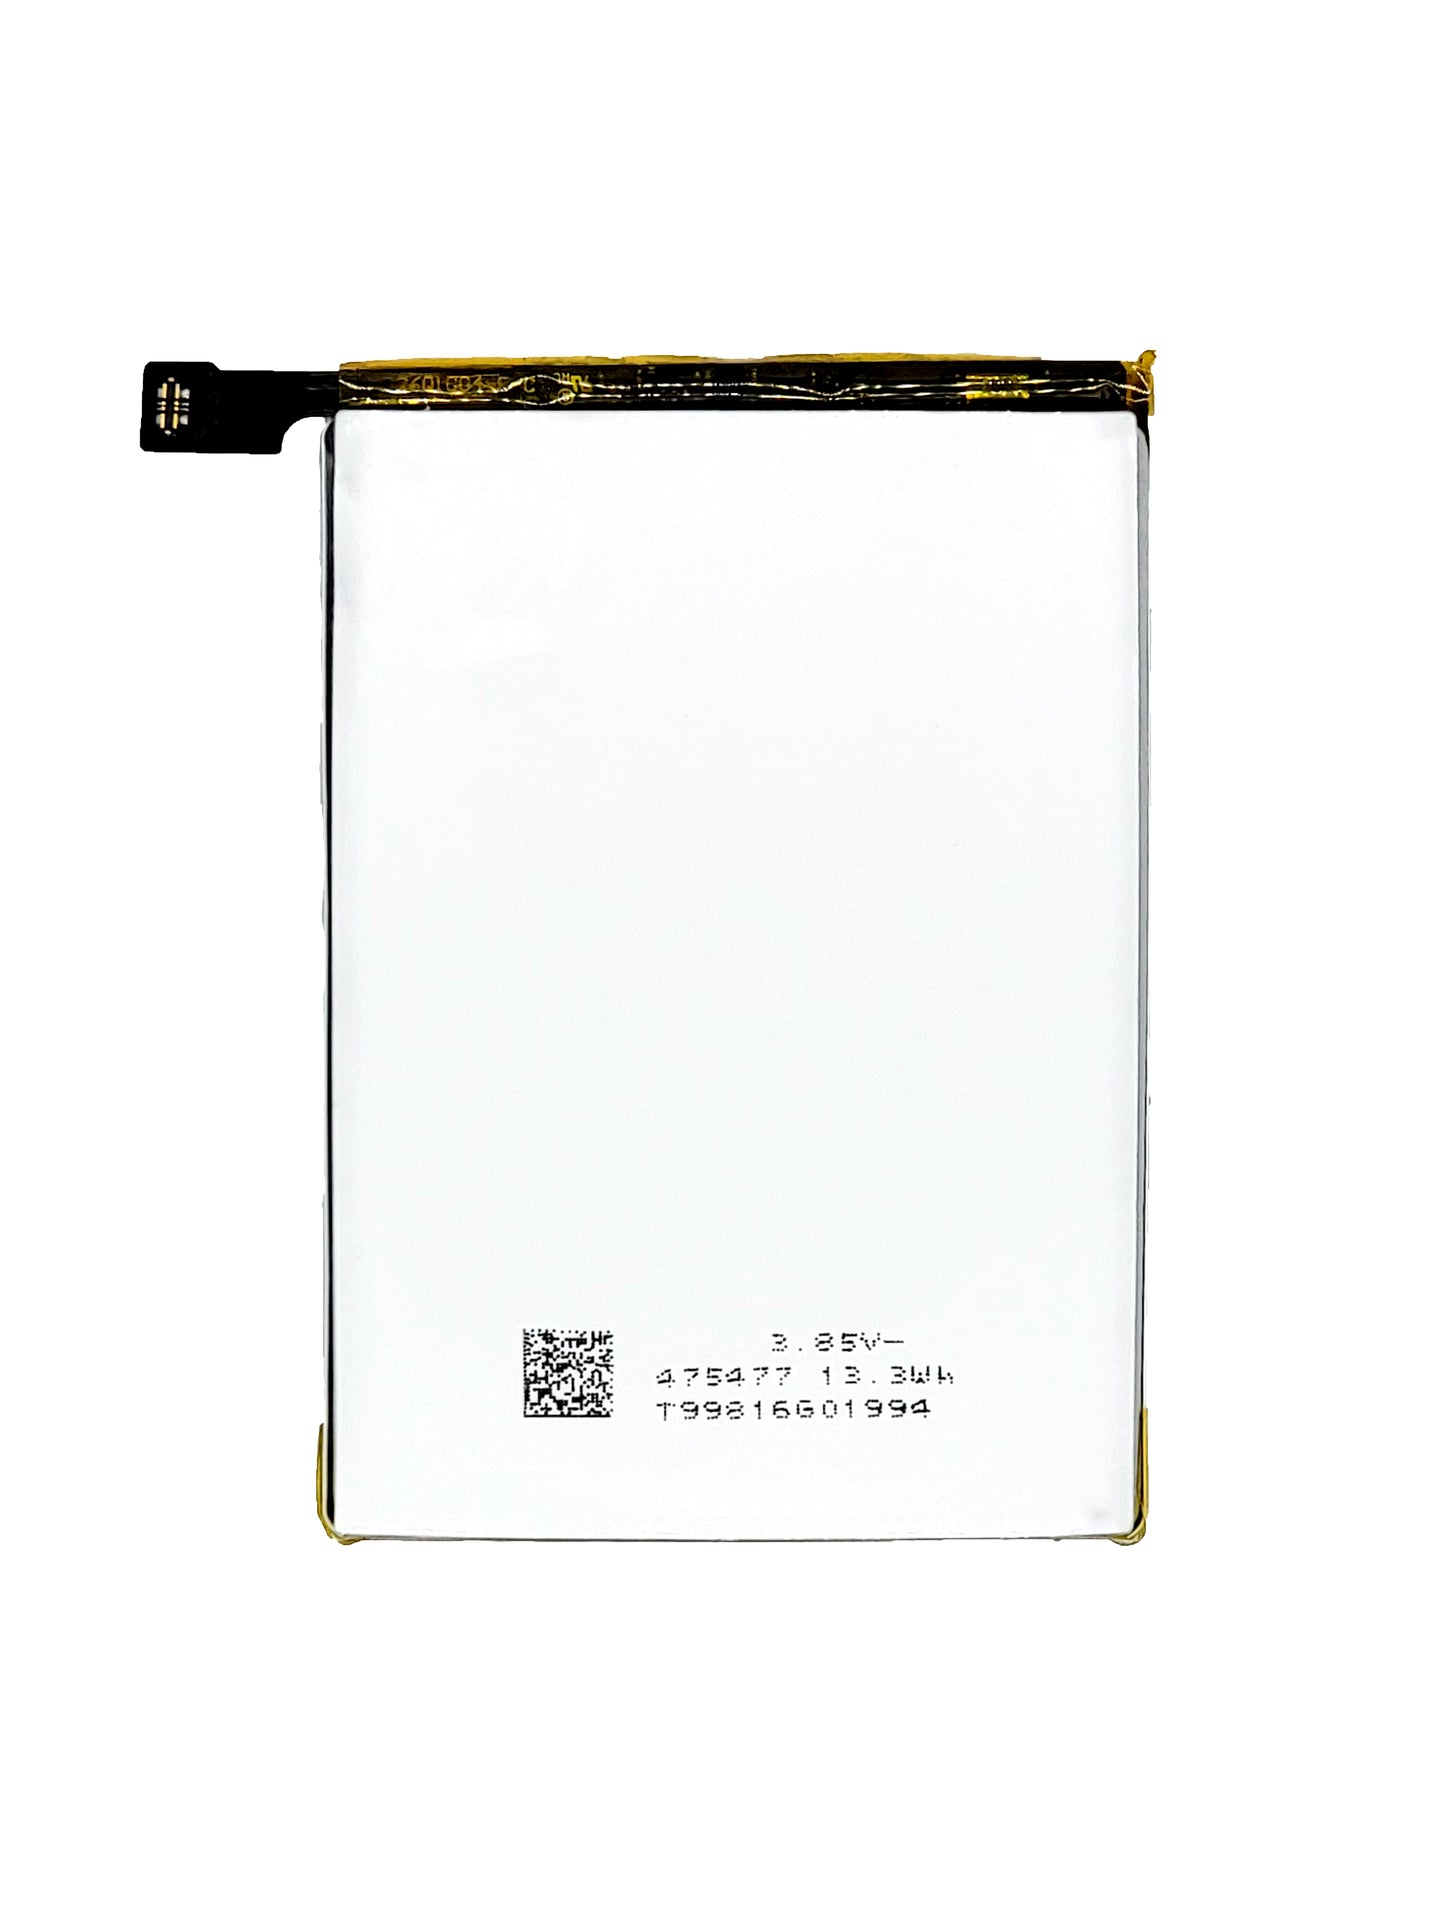 GOP Pixel 3 XL Battery (G013C-B) (Premium)